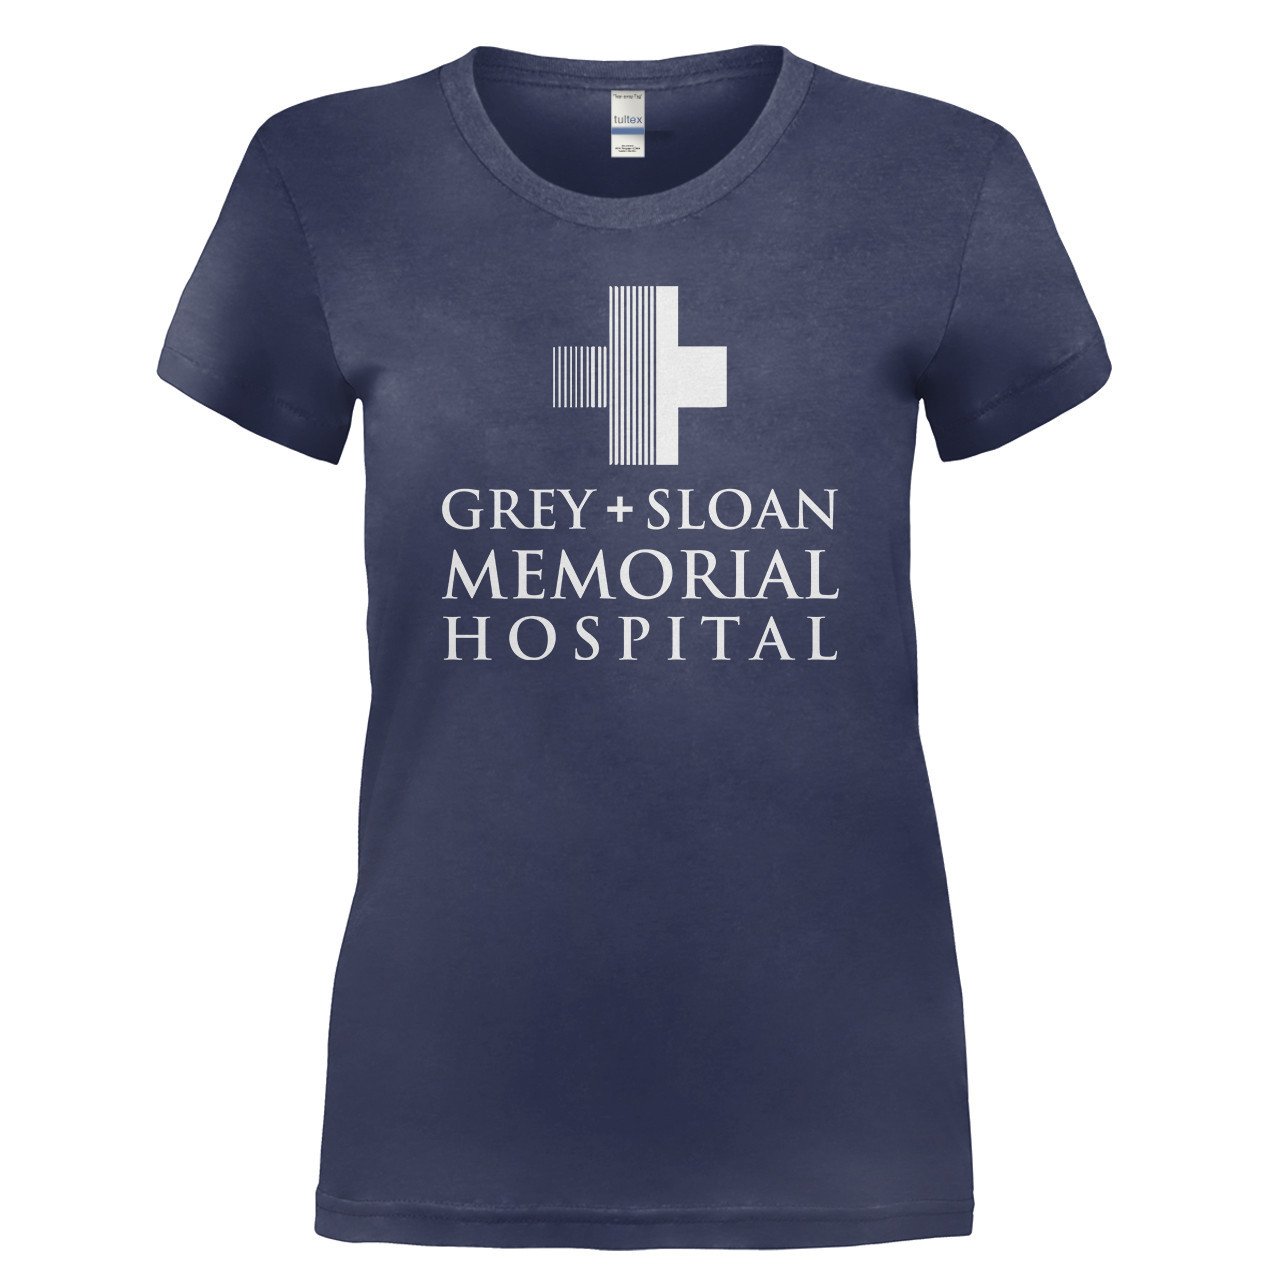 grey and sloan memorial hospital sweatshirt